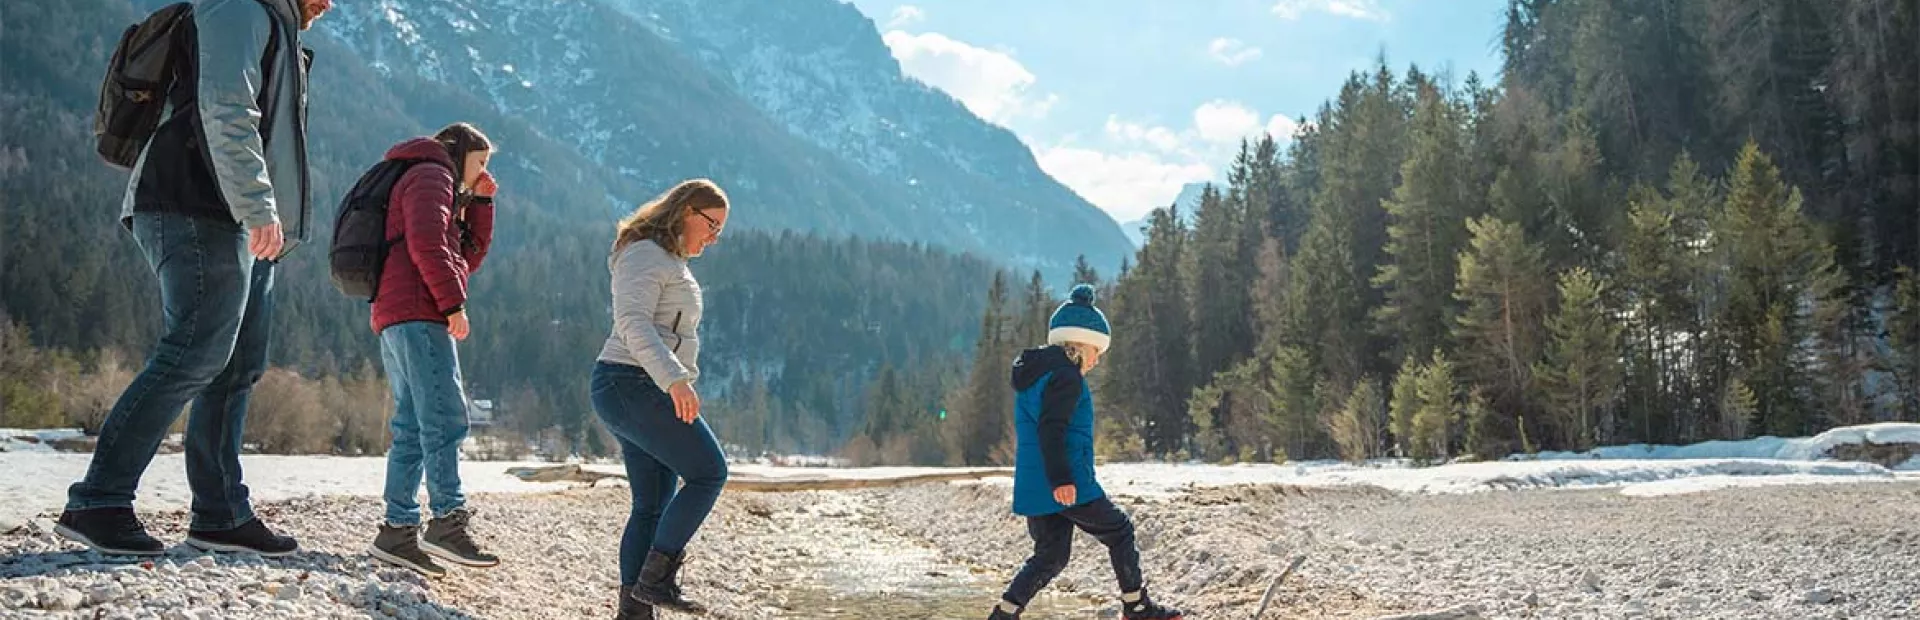 Familie überquert Bach in den Bergen